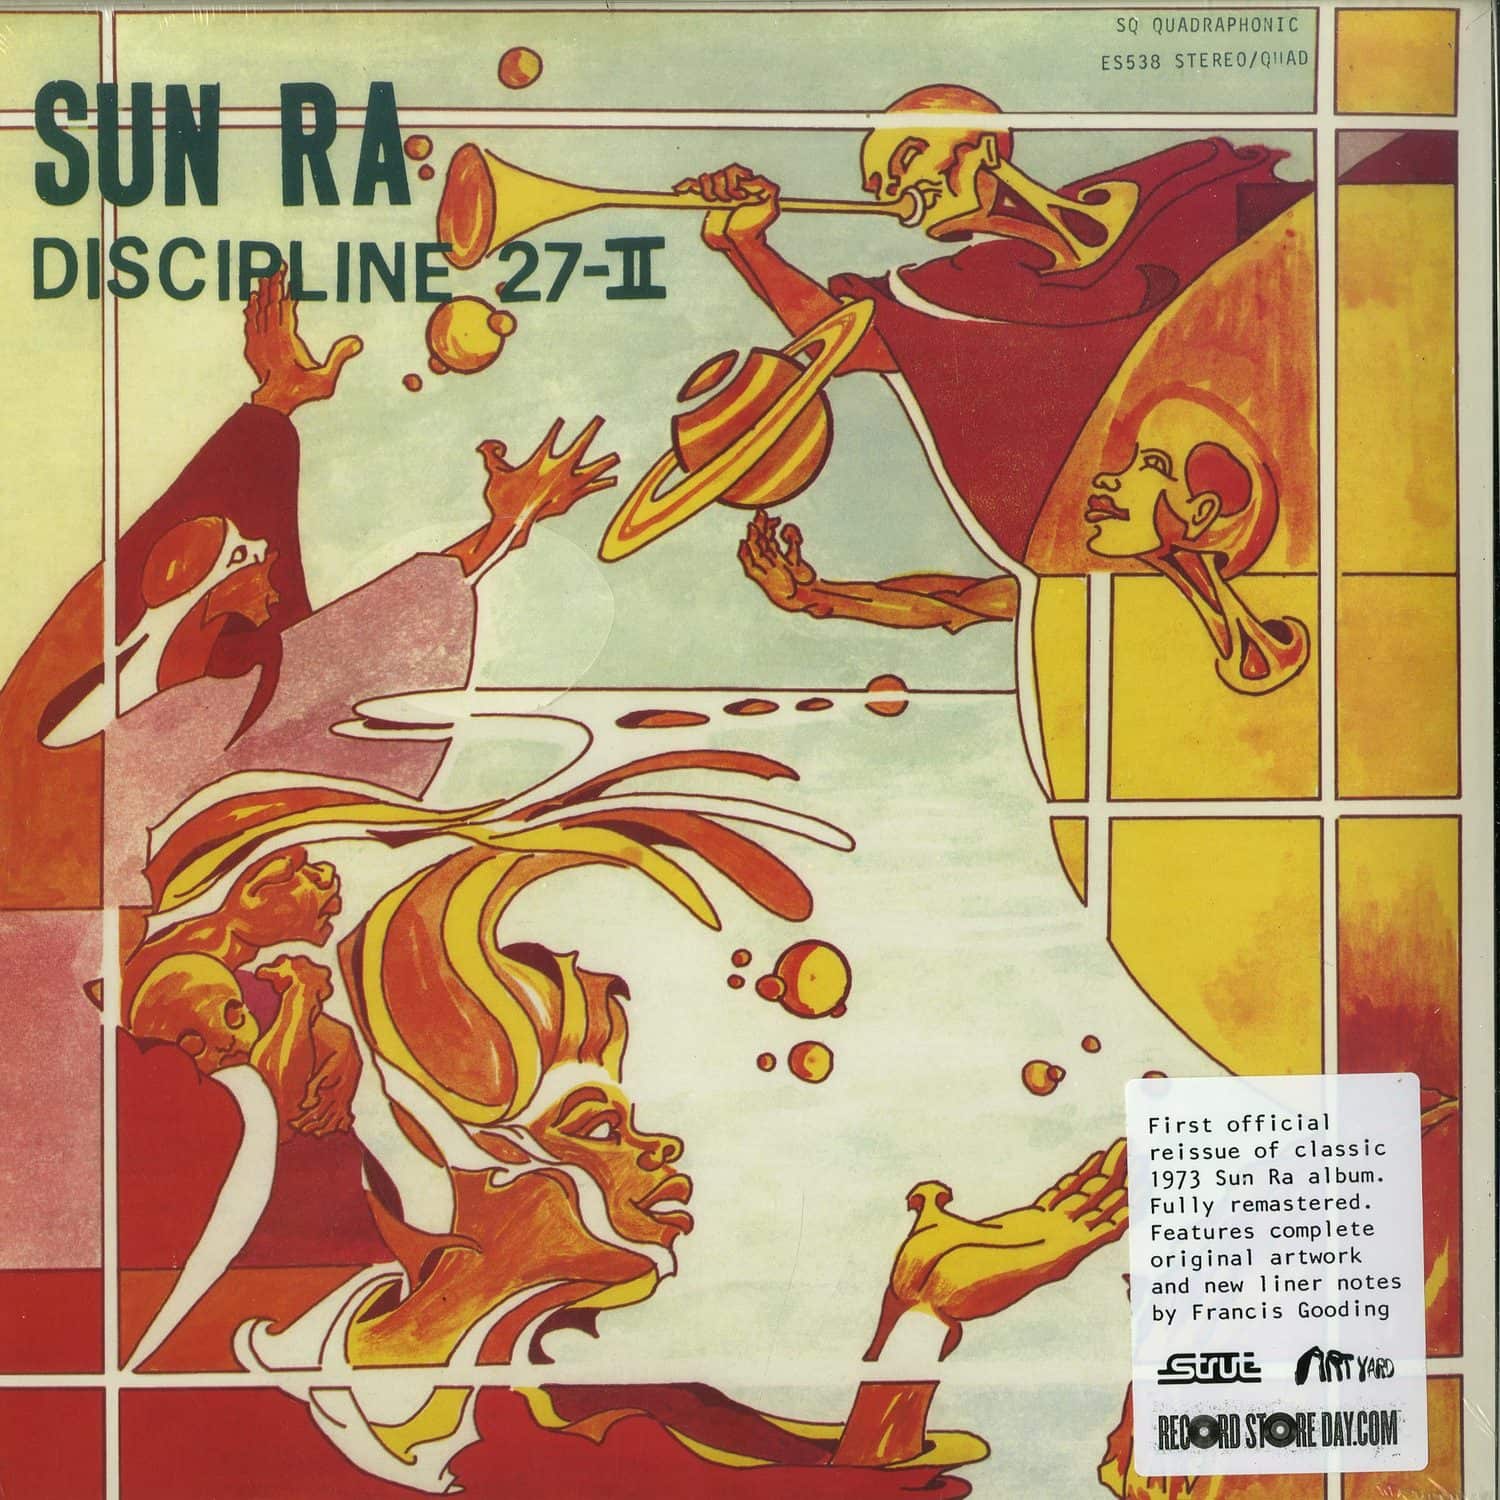 Sun Ra - DISCIPLINE 27-II 